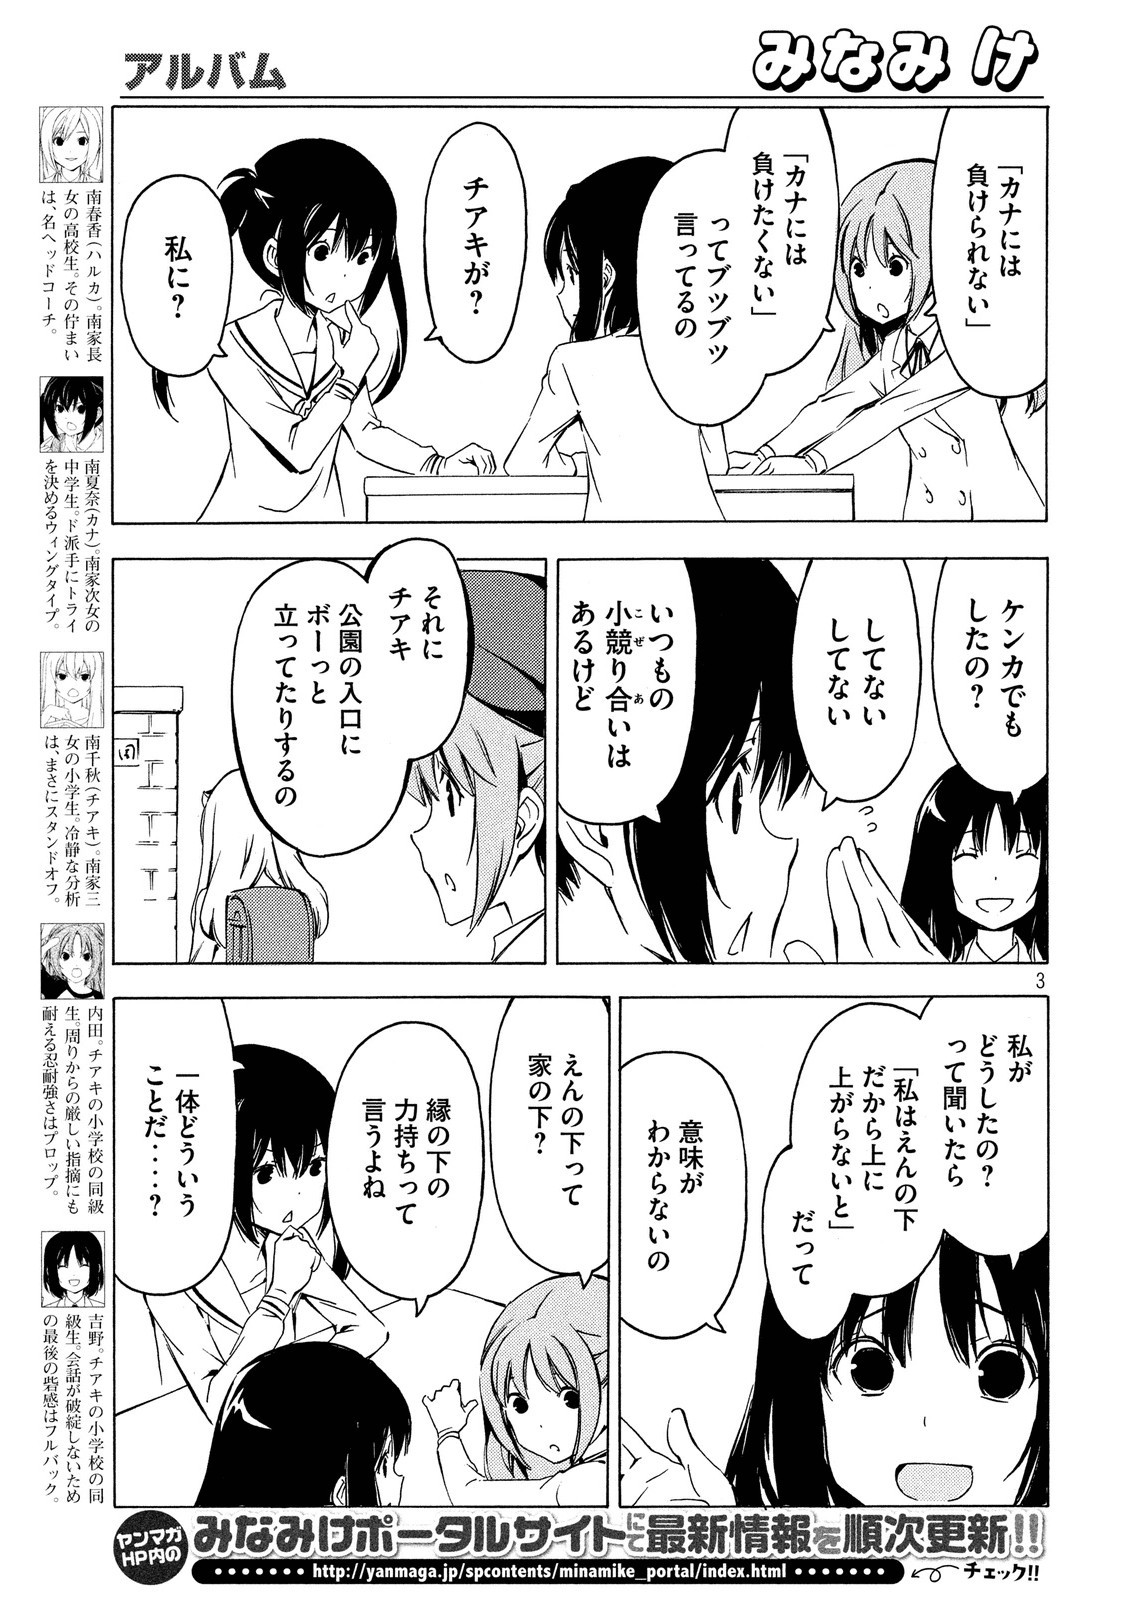 Minami-ke - Chapter 279 - Page 3